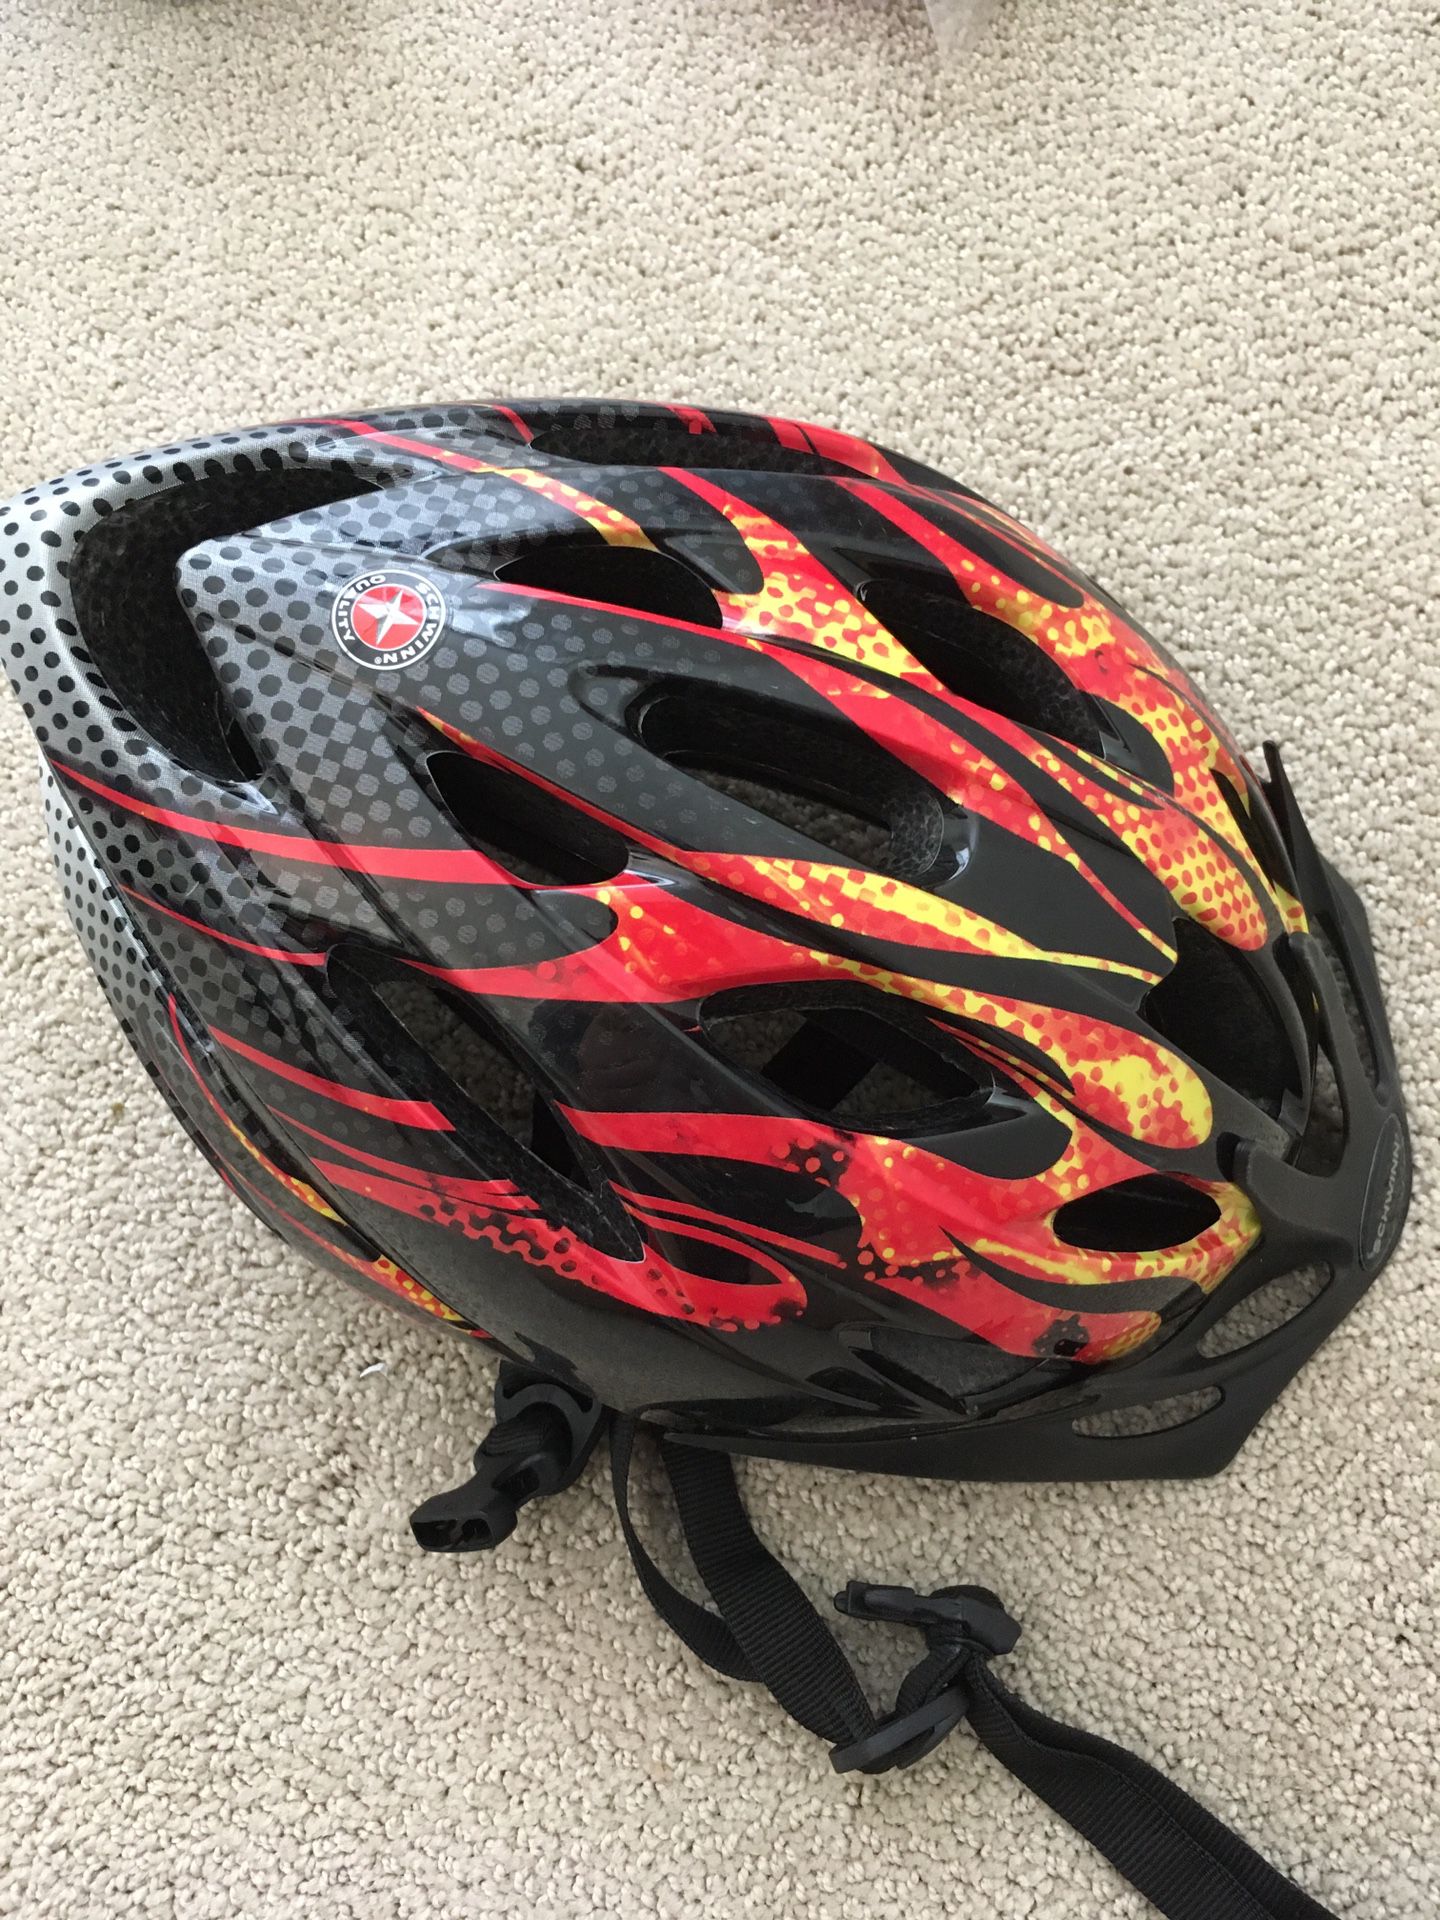 Helmet for around 3-6 year old